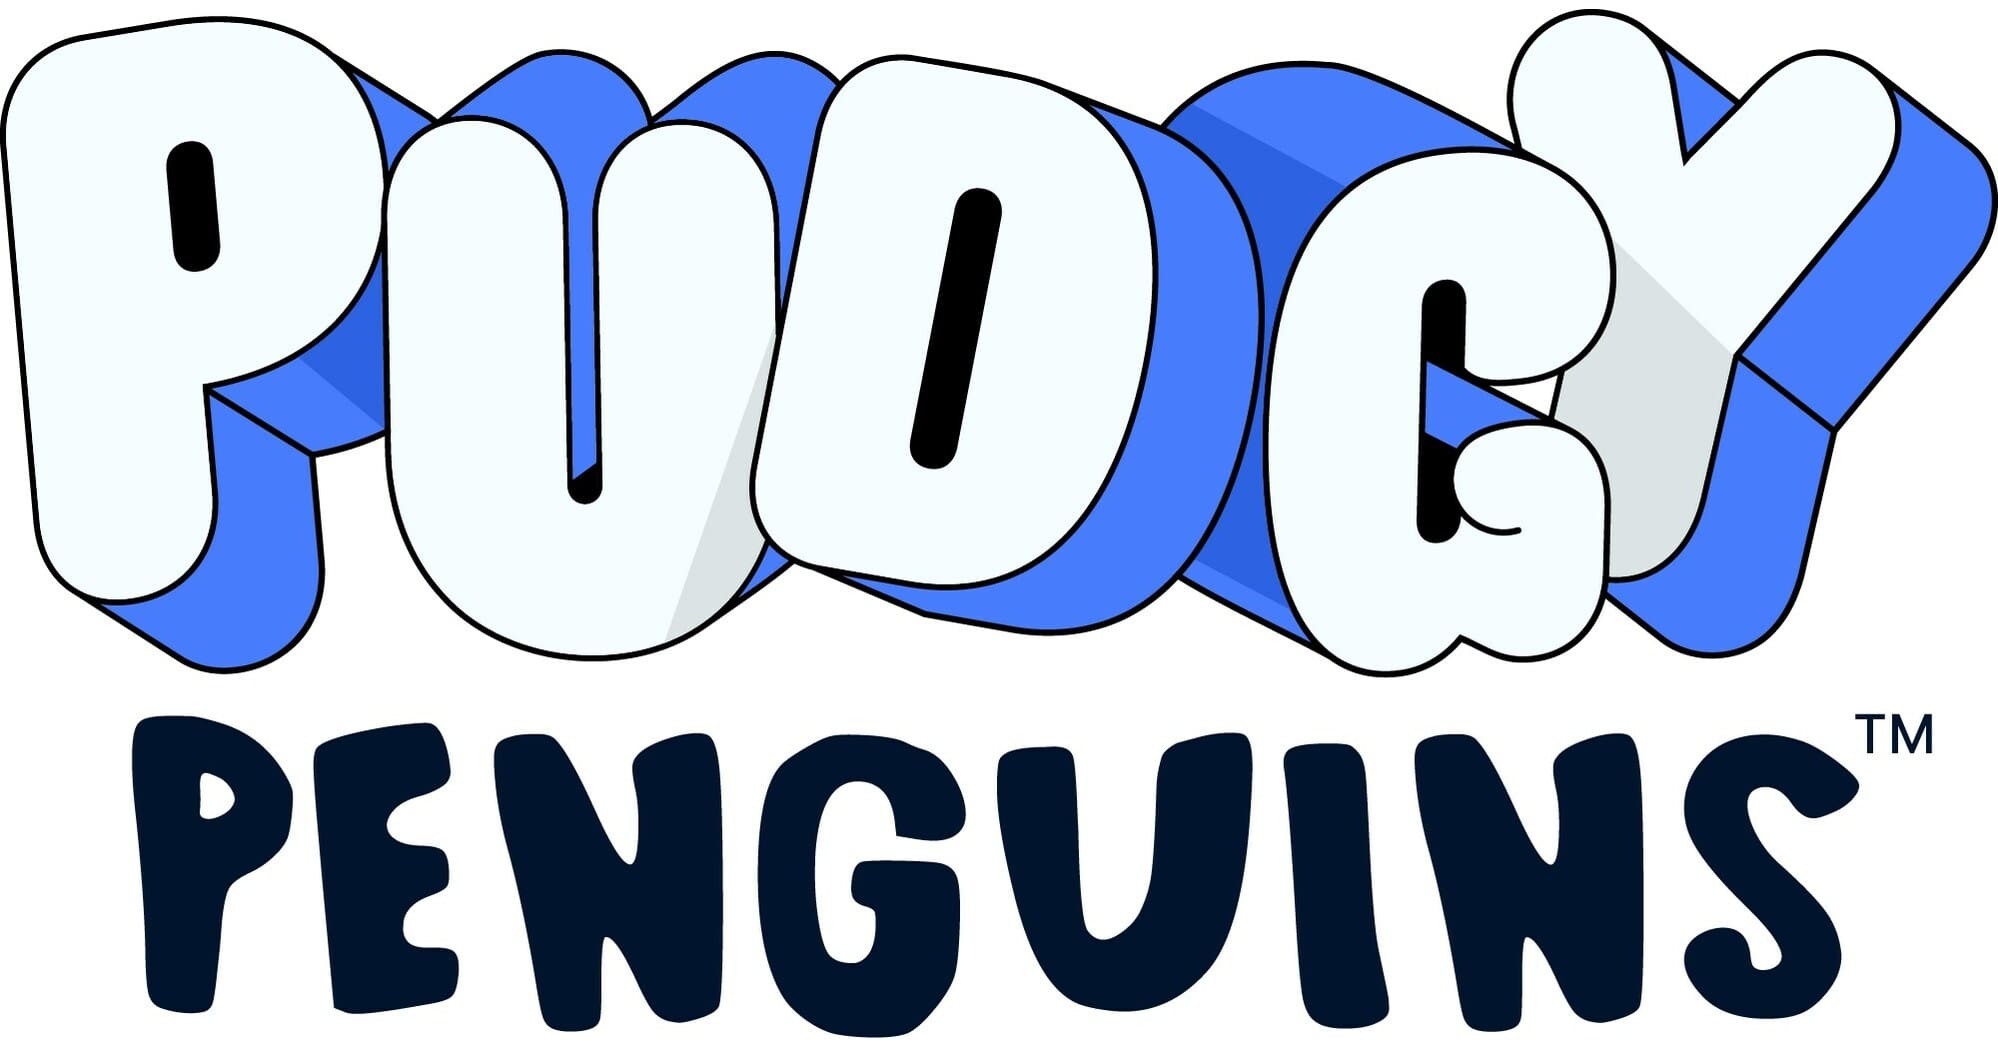 Pudgy Penguins Logo